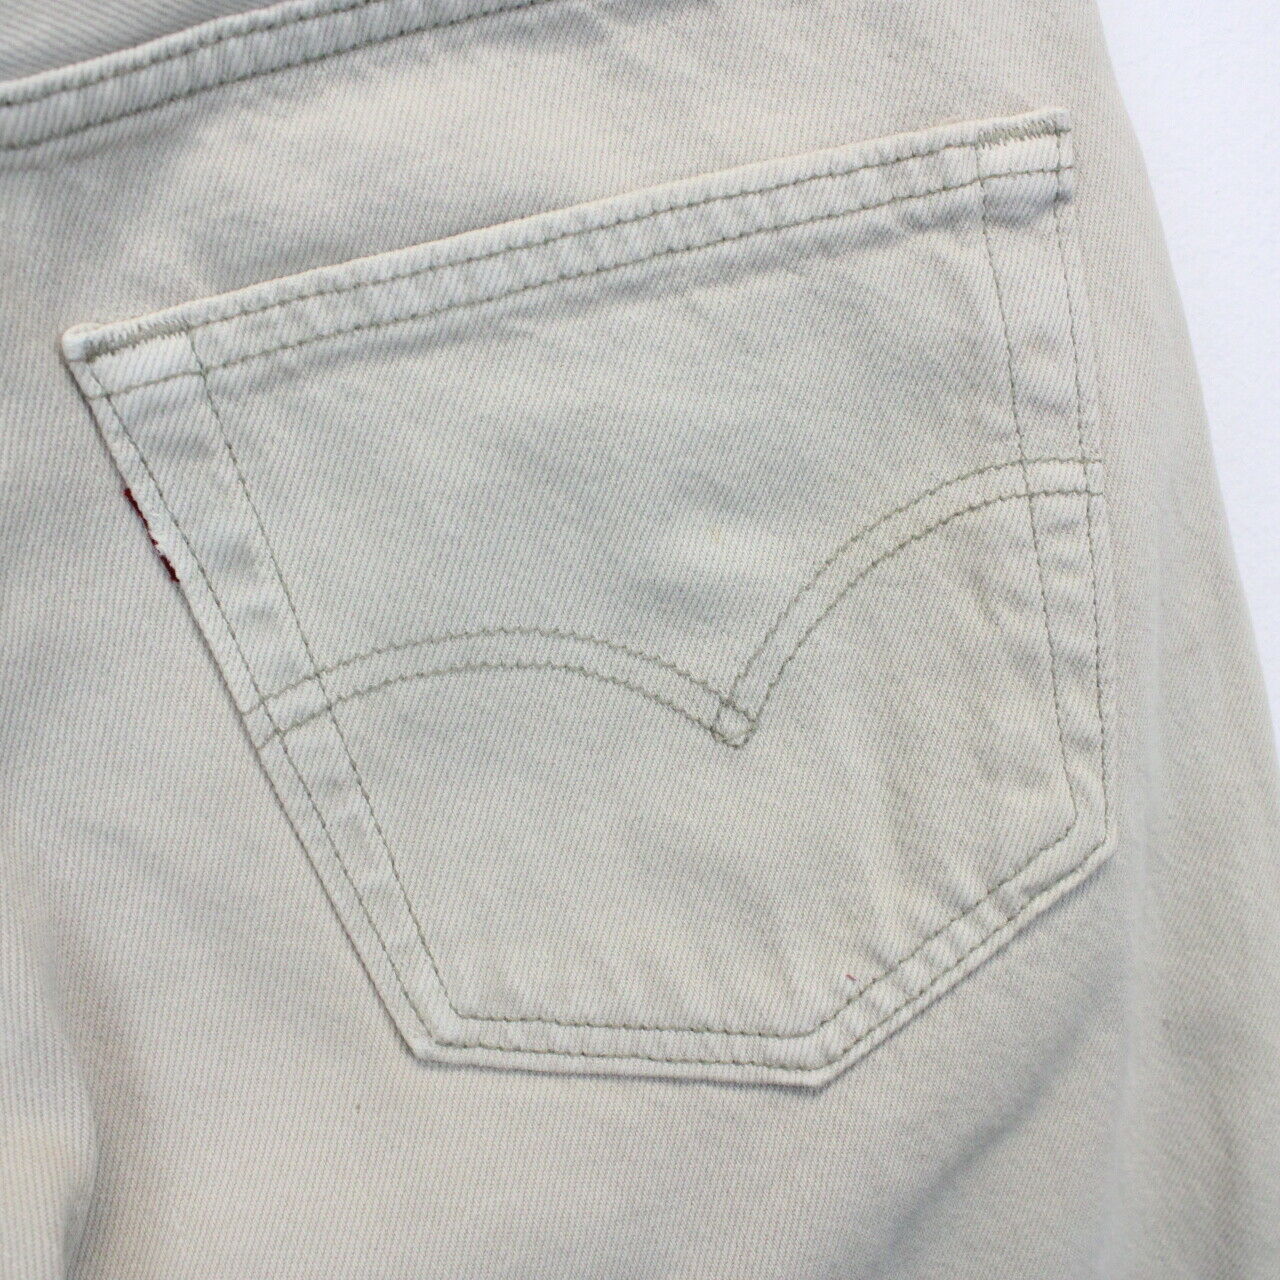 90s LEVIS 501 Jeans Beige | W30 L30